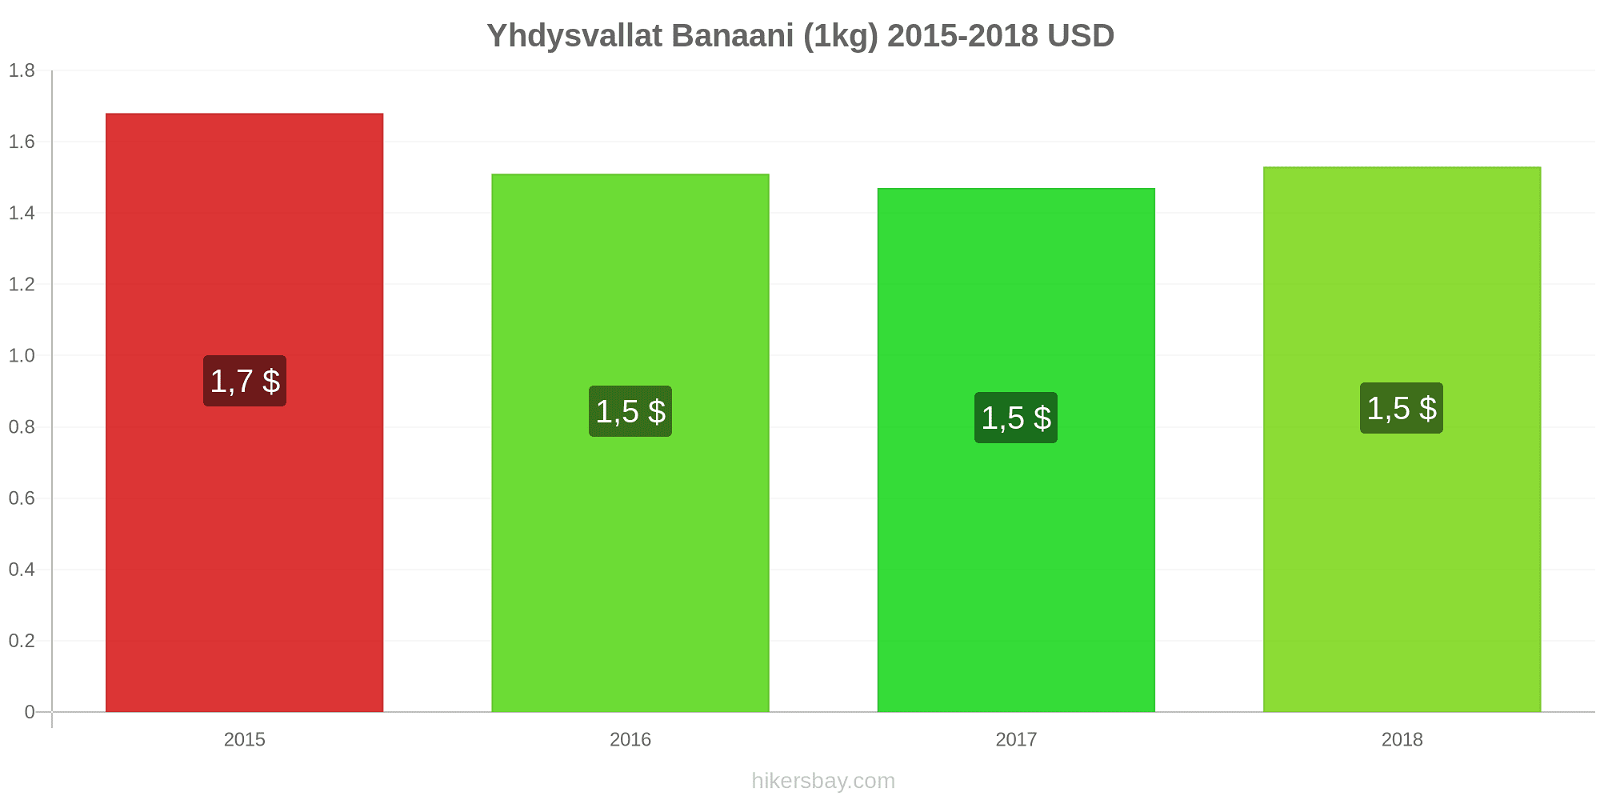 Yhdysvallat hintojen muutokset Banaani (1kg) hikersbay.com